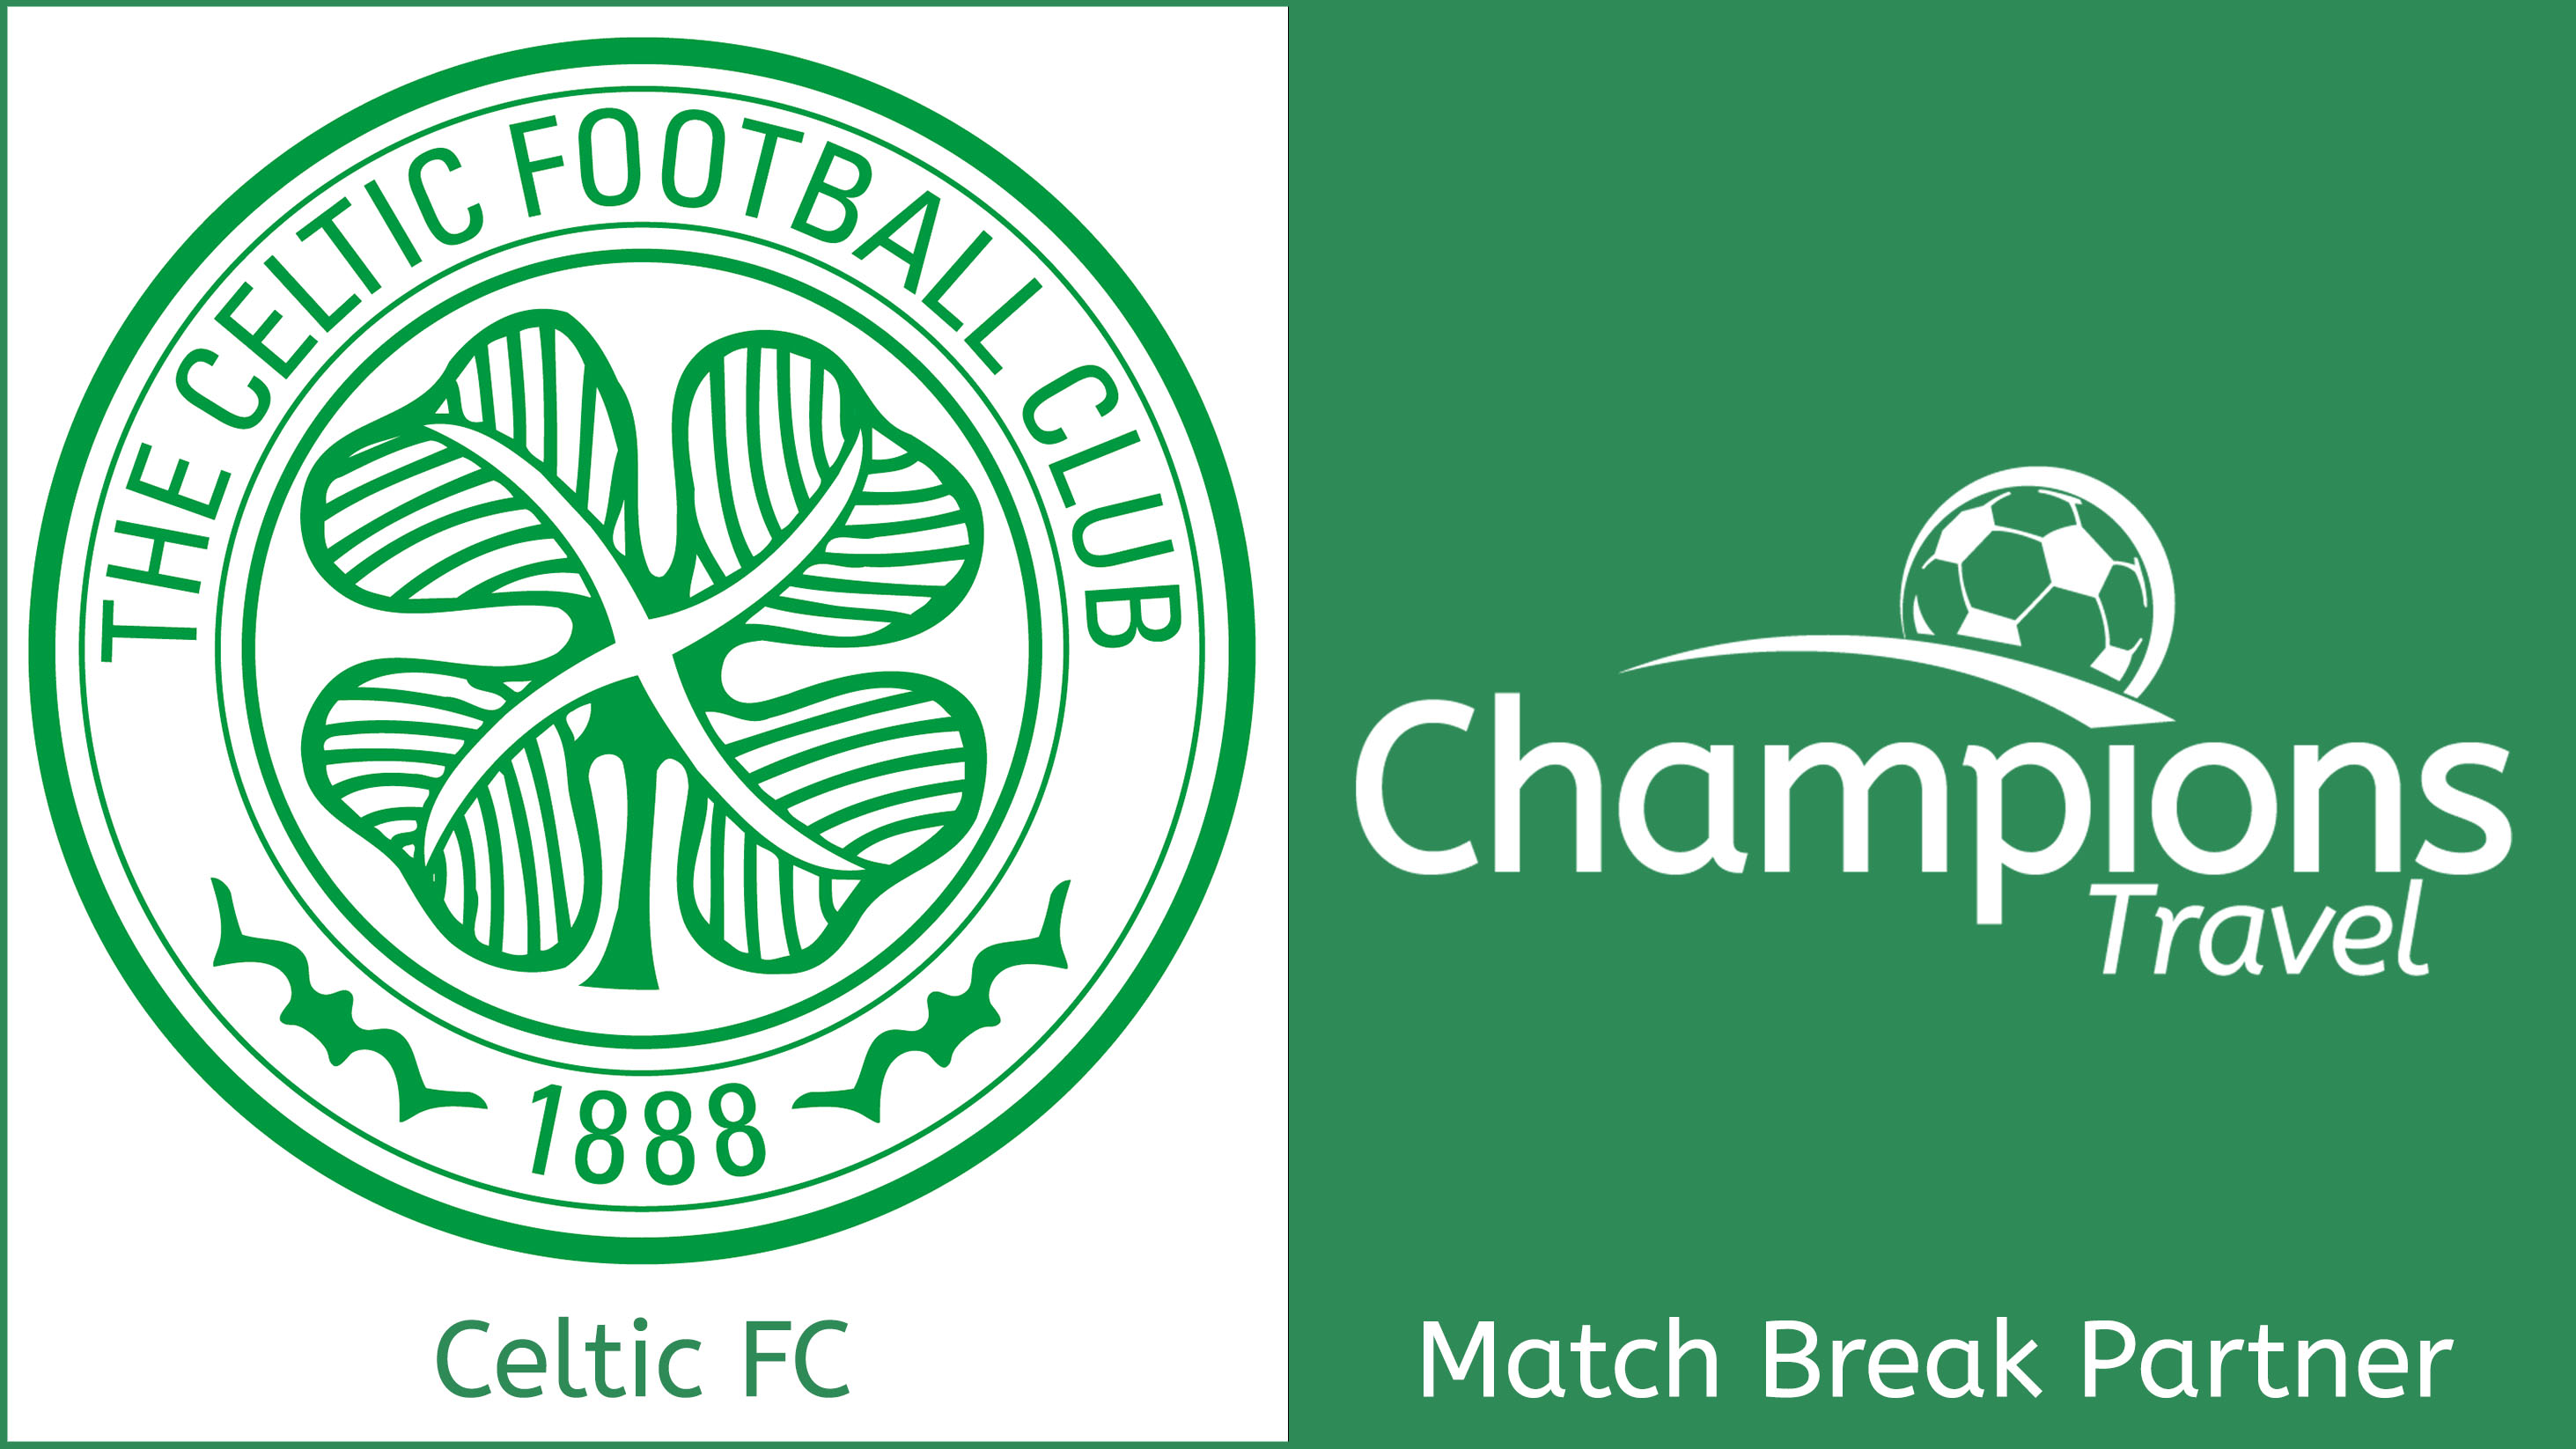 Match Break Partner of Celtic Football Club